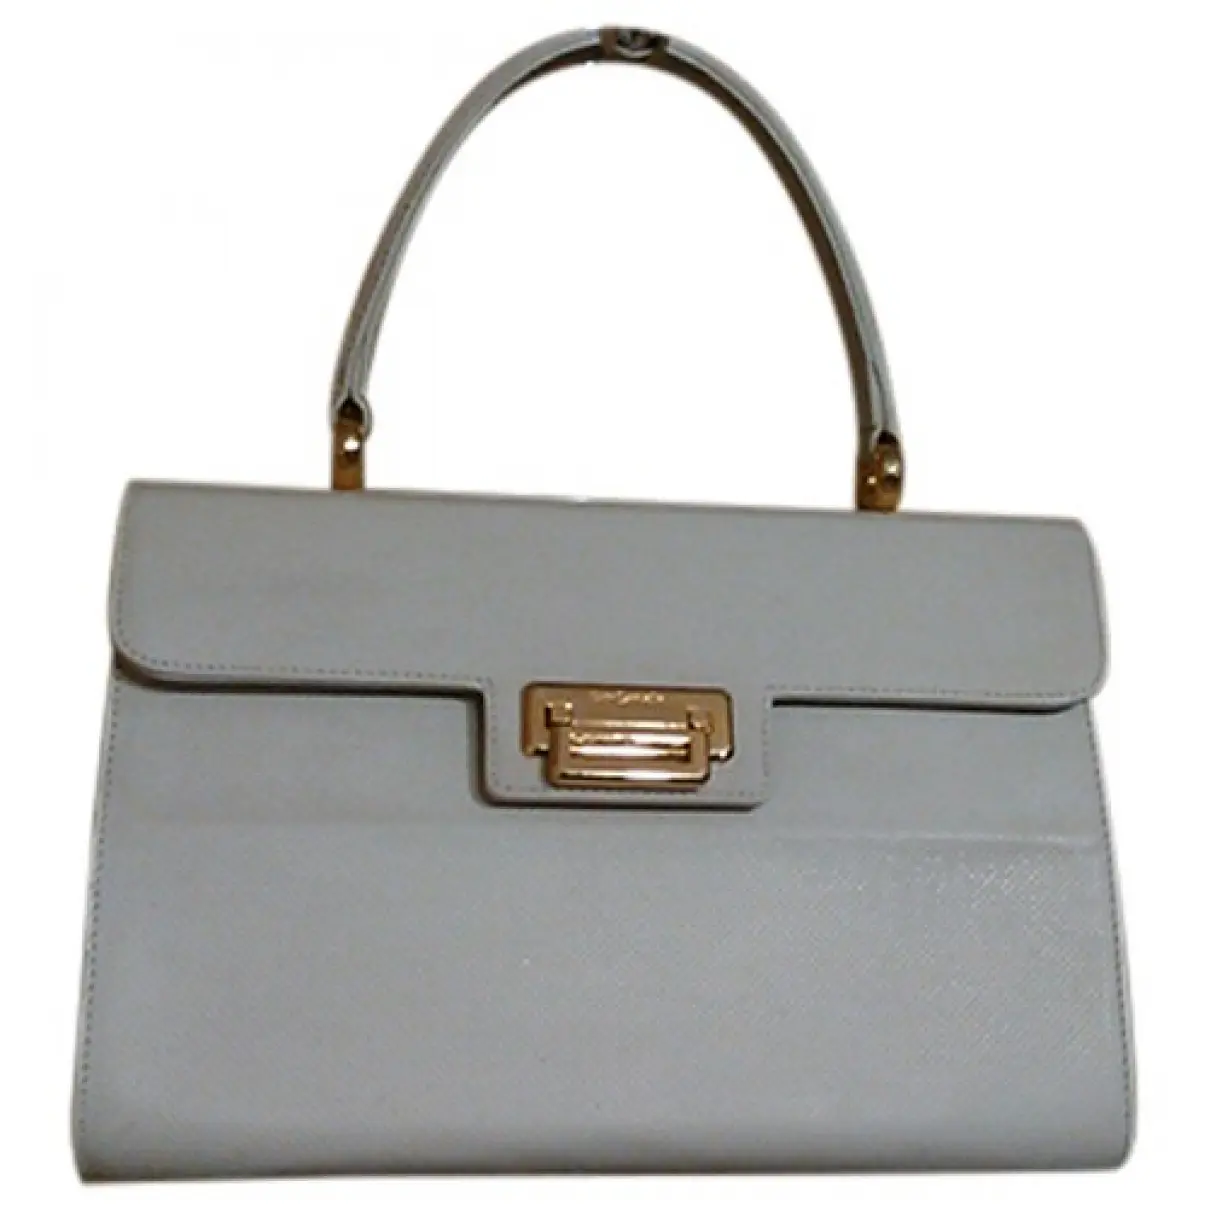 Leather handbag Guy Laroche - Vintage